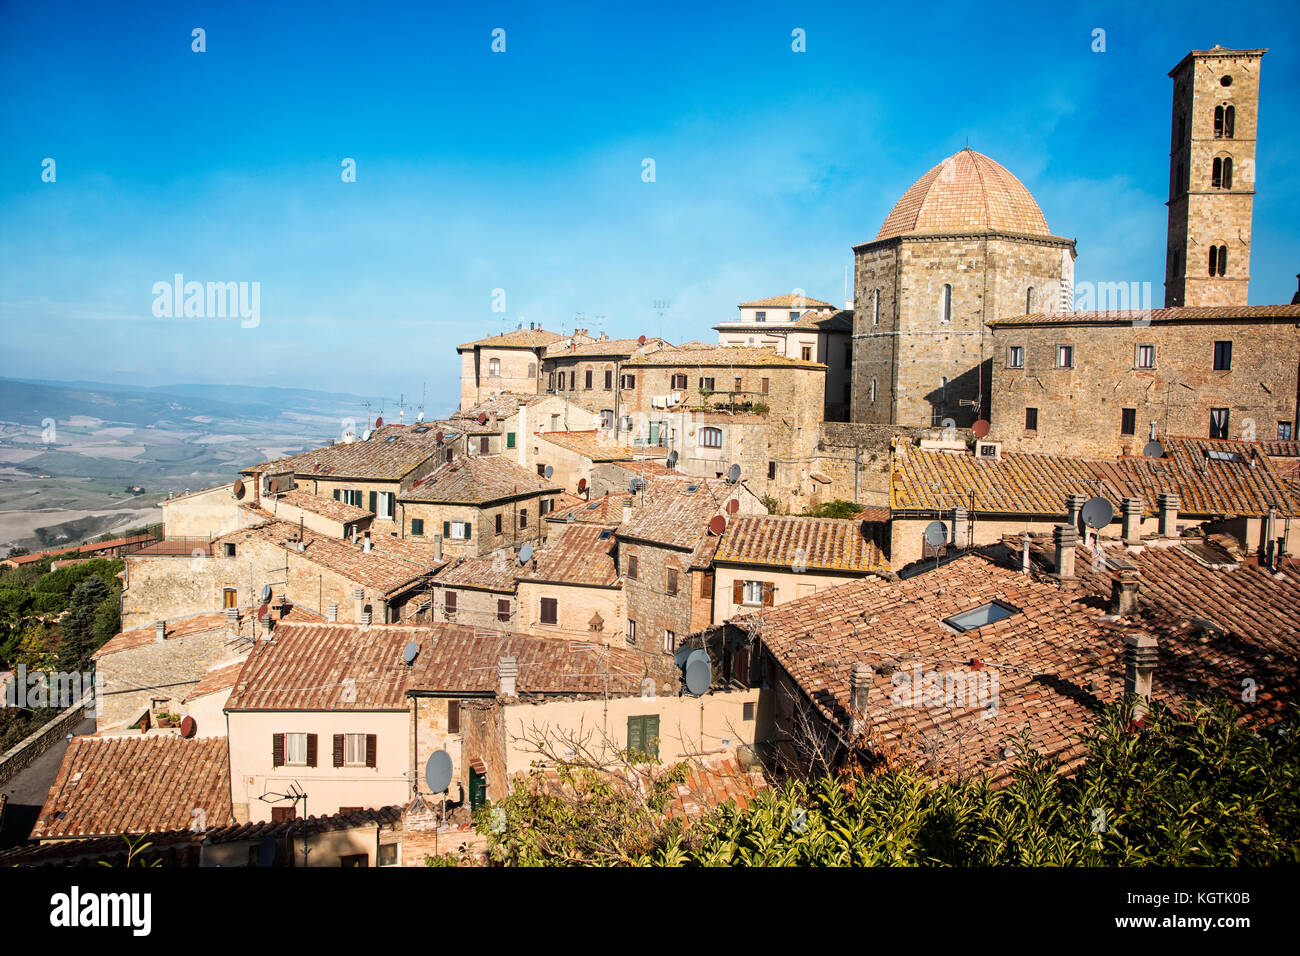 La ciudad de Volterra en la cima de la colina de la Toscana, Italia. Foto de stock